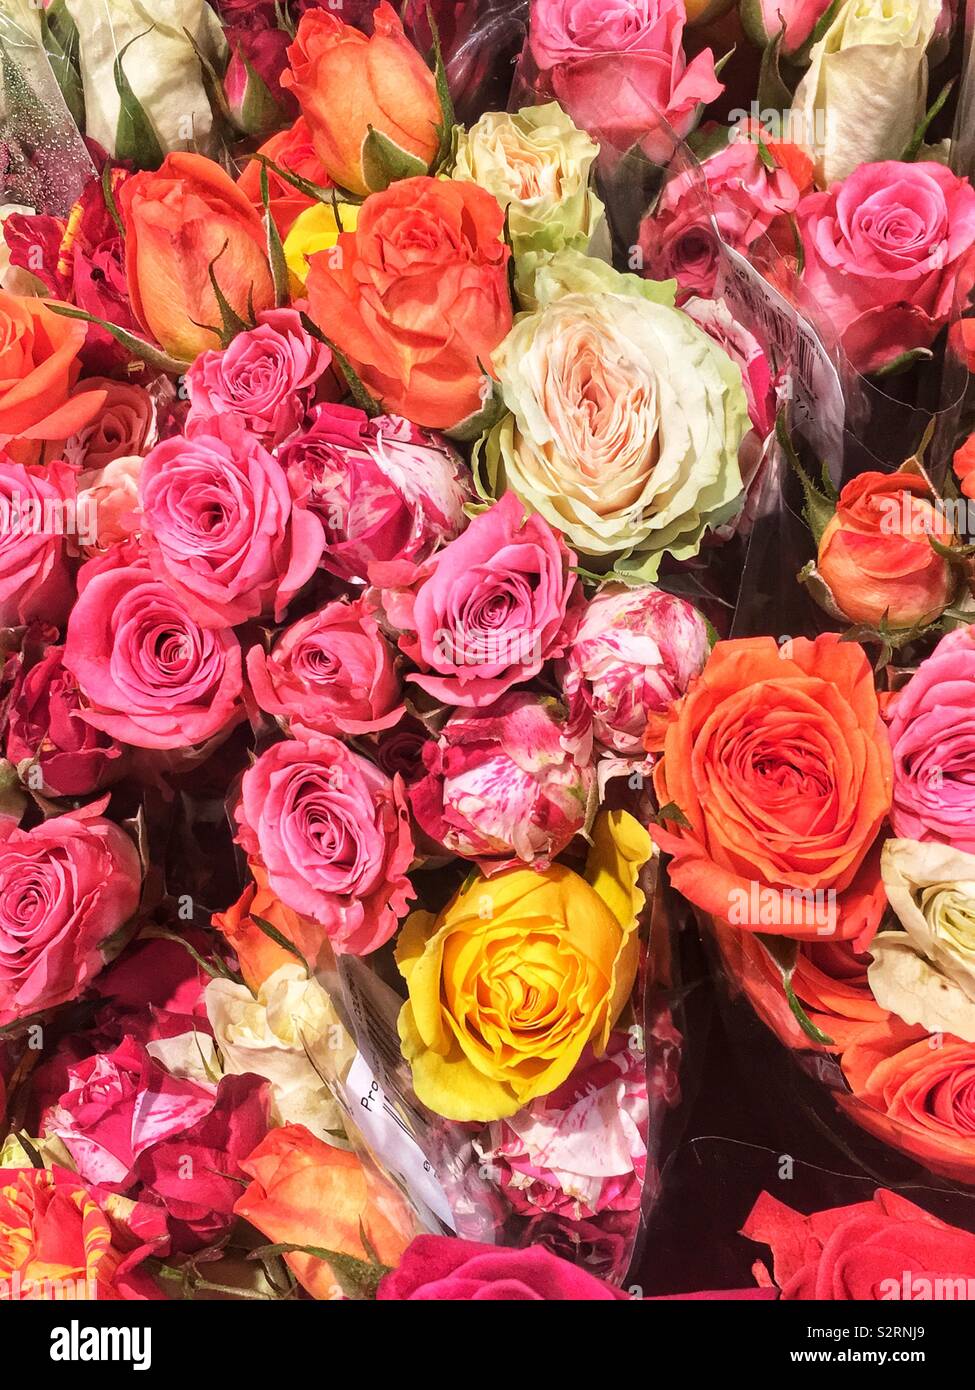 Full frame of many fresh colorful roses in full bloom. Stock Photo